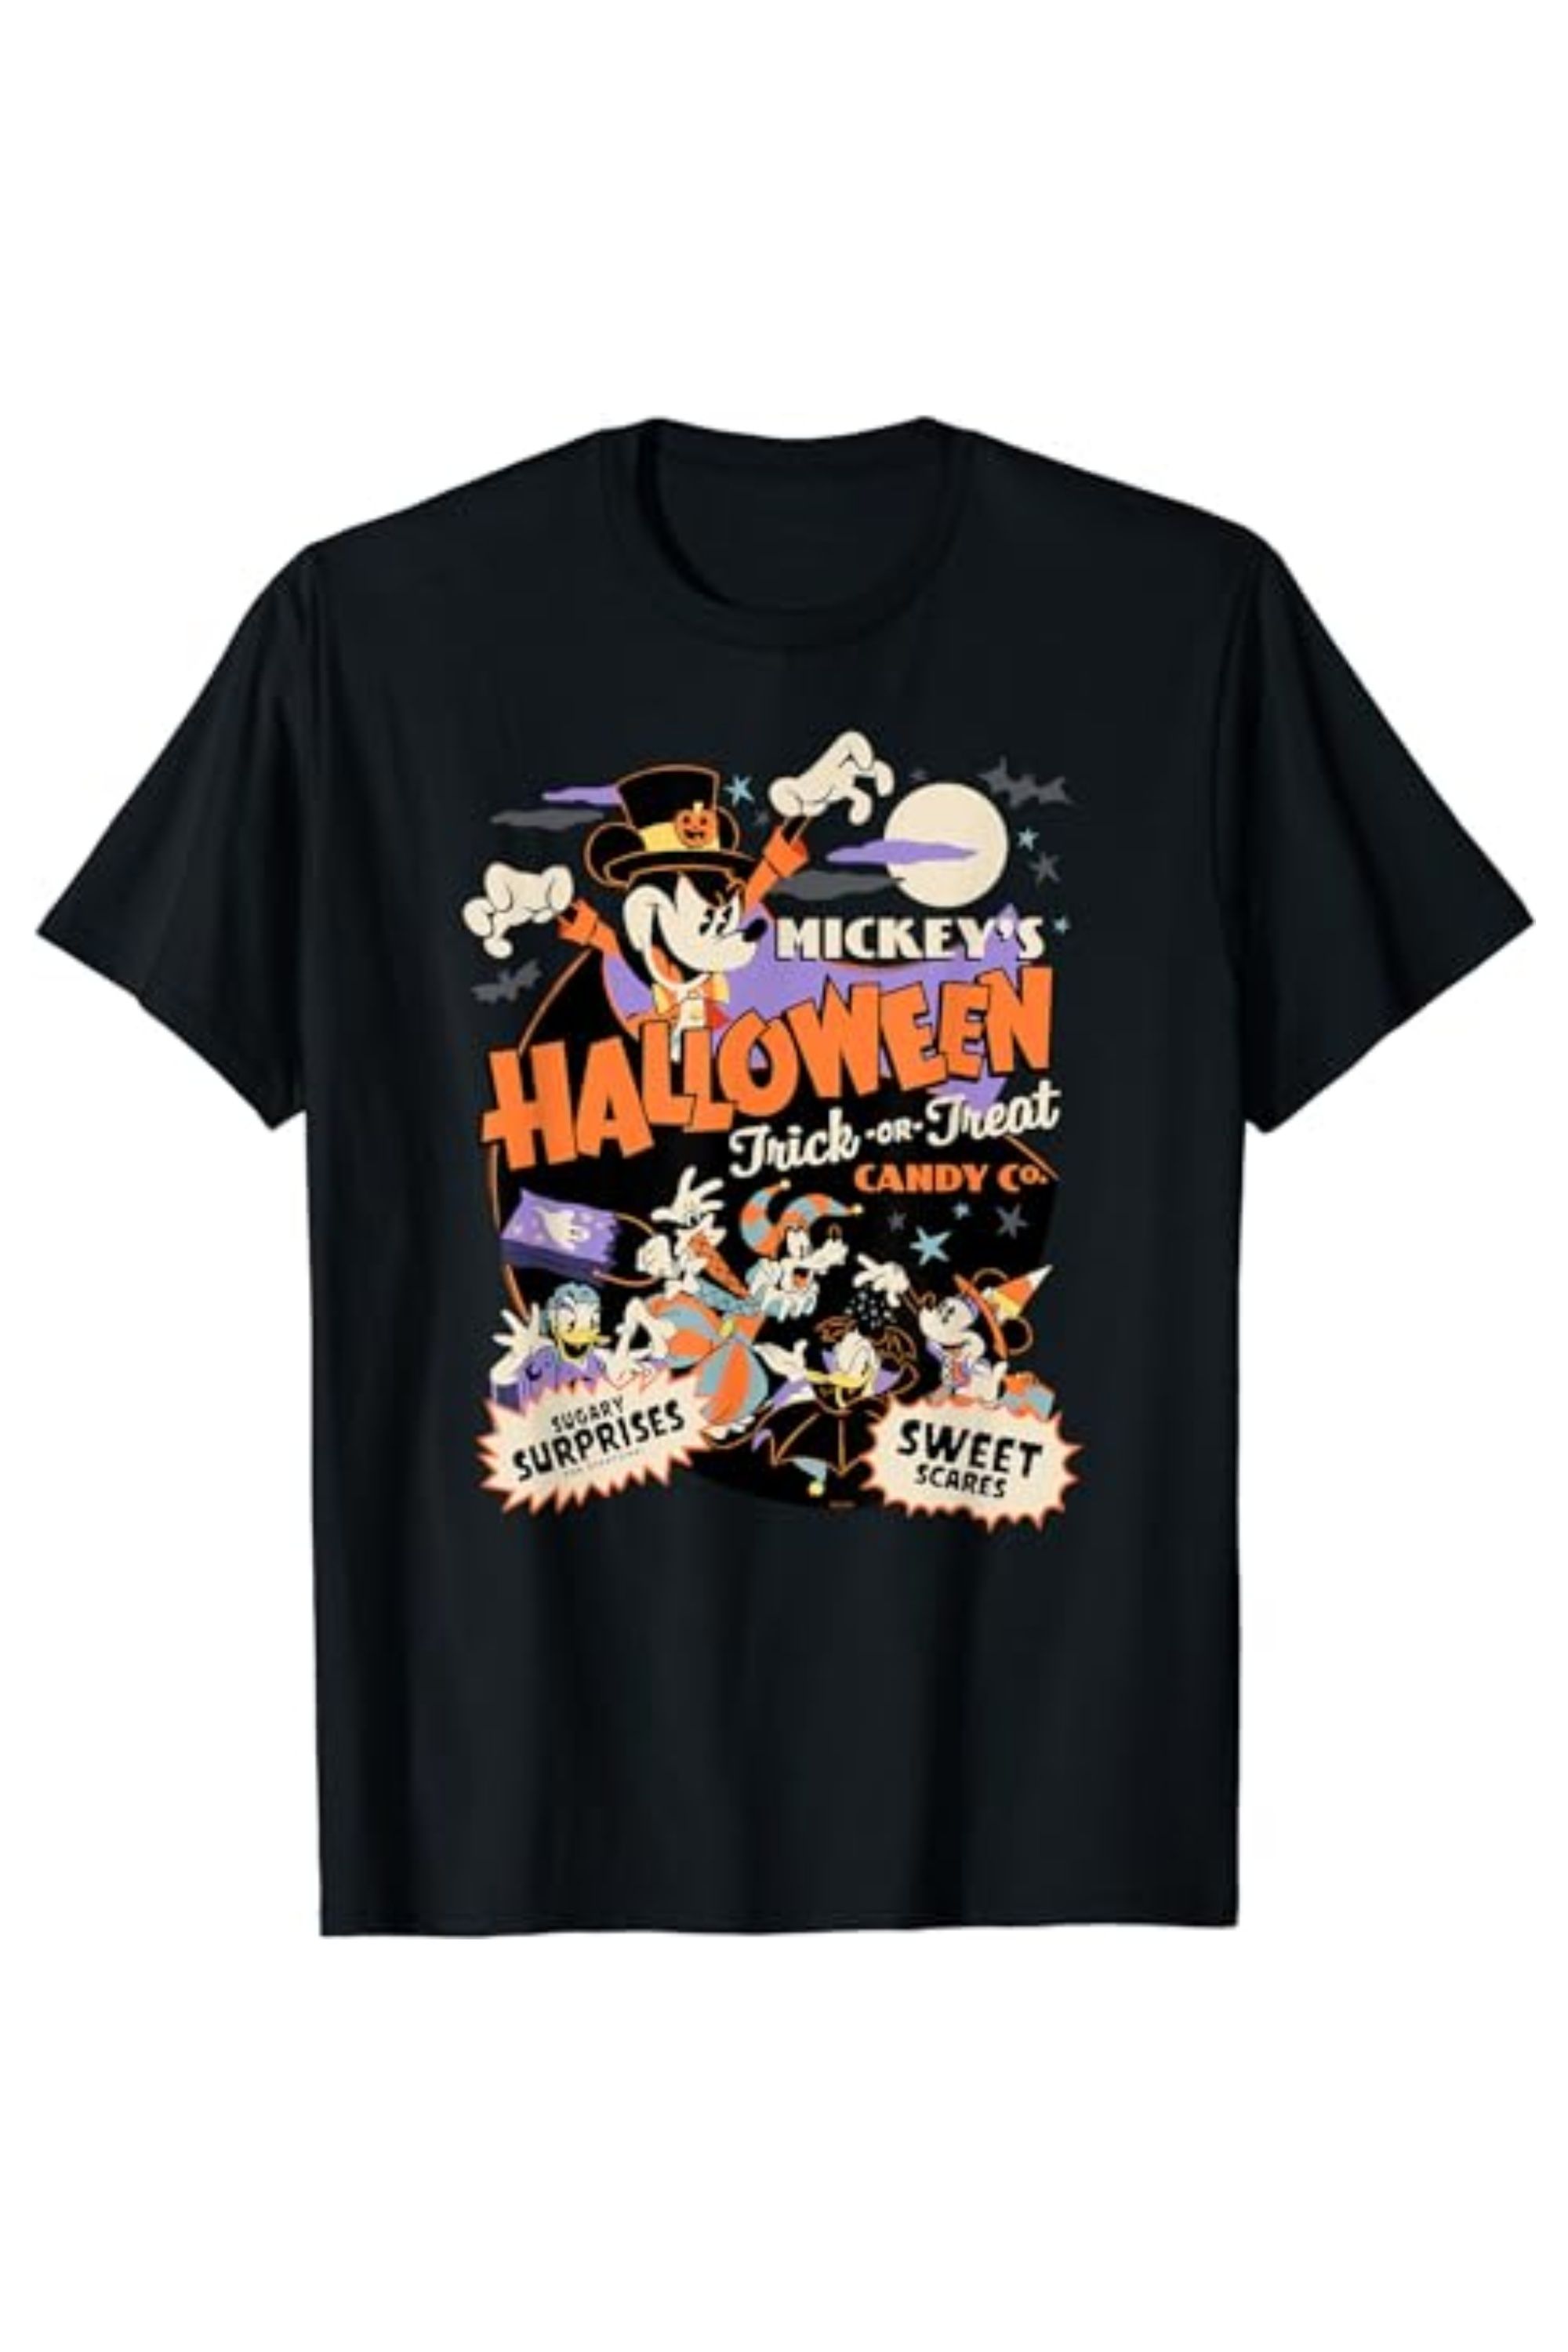 The Best Halloween-Themed Disney T-Shirts